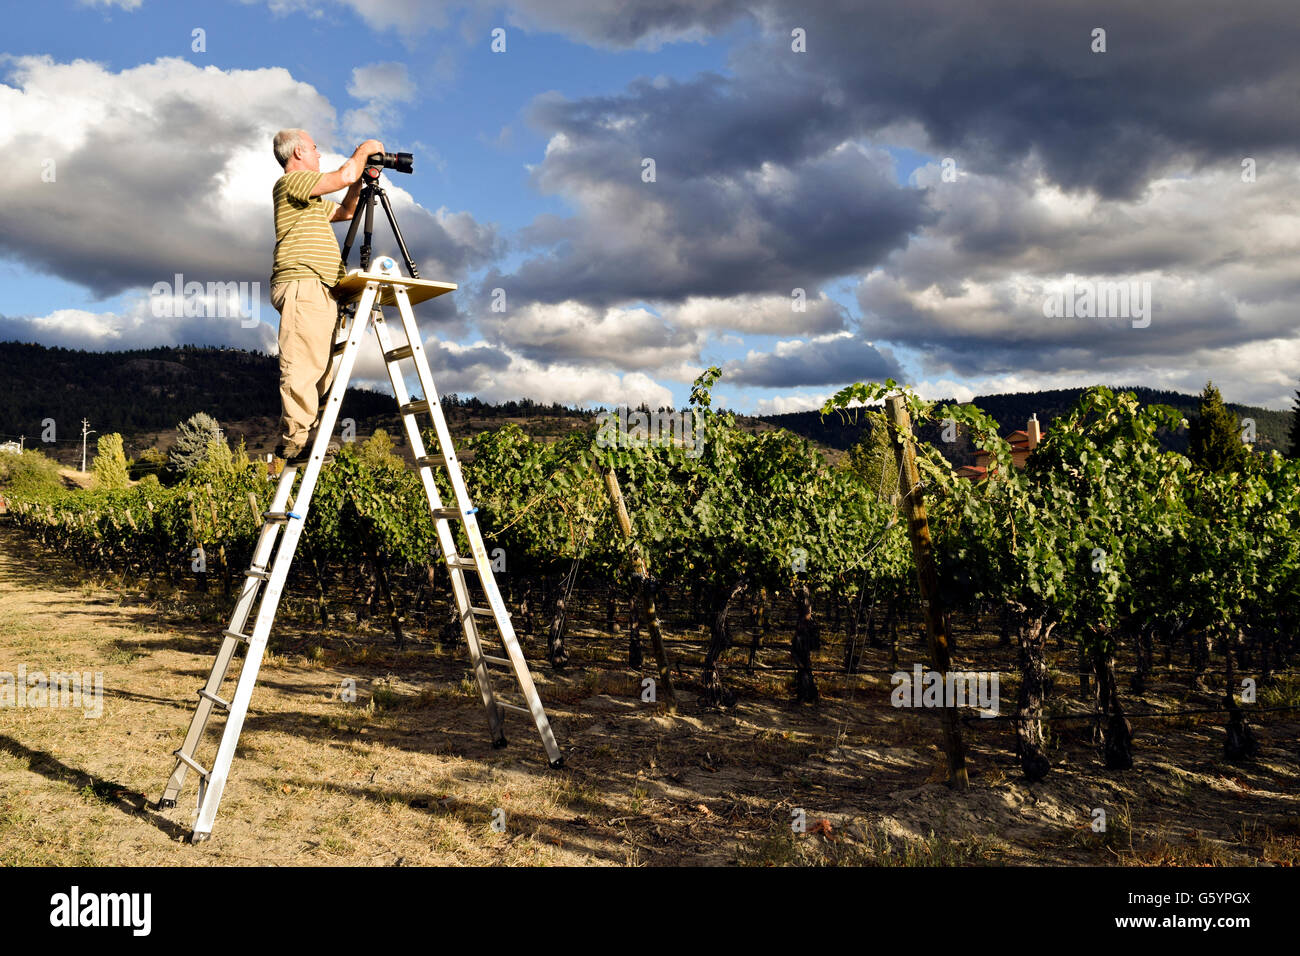 Hombre adulto Senior fotografiar un paisaje de viñedos en Naramata, British Columbia, Canadá, situado en el Valle Okanagan. Foto de stock